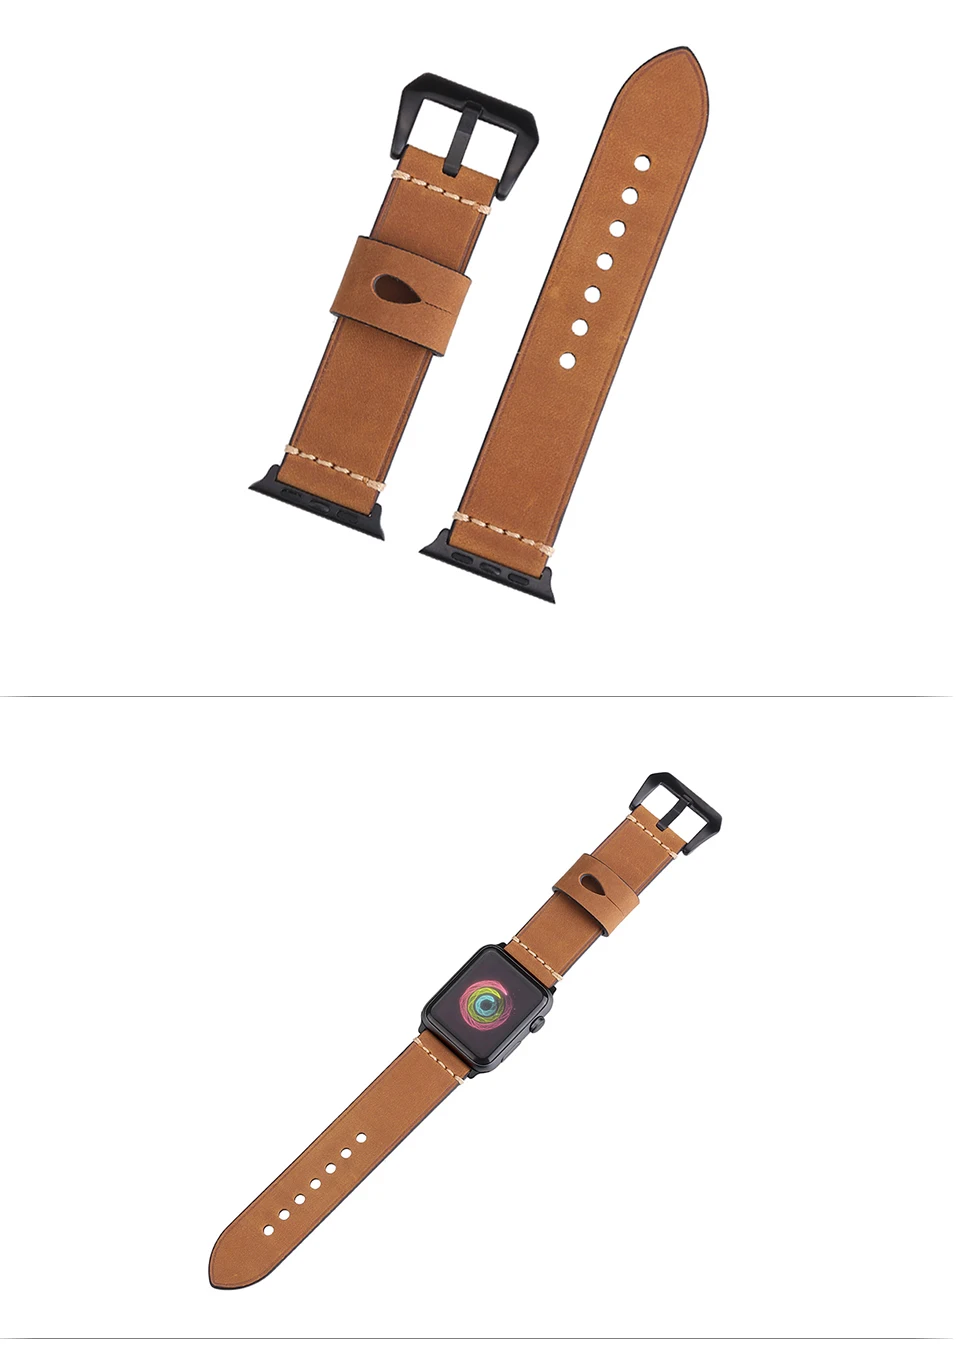 BEAFIRY For Apple watch iwatch Watch Band Straps 42mm Genuine Crazy Horse Calfskin Leather Dark Brown Light Brown Grey